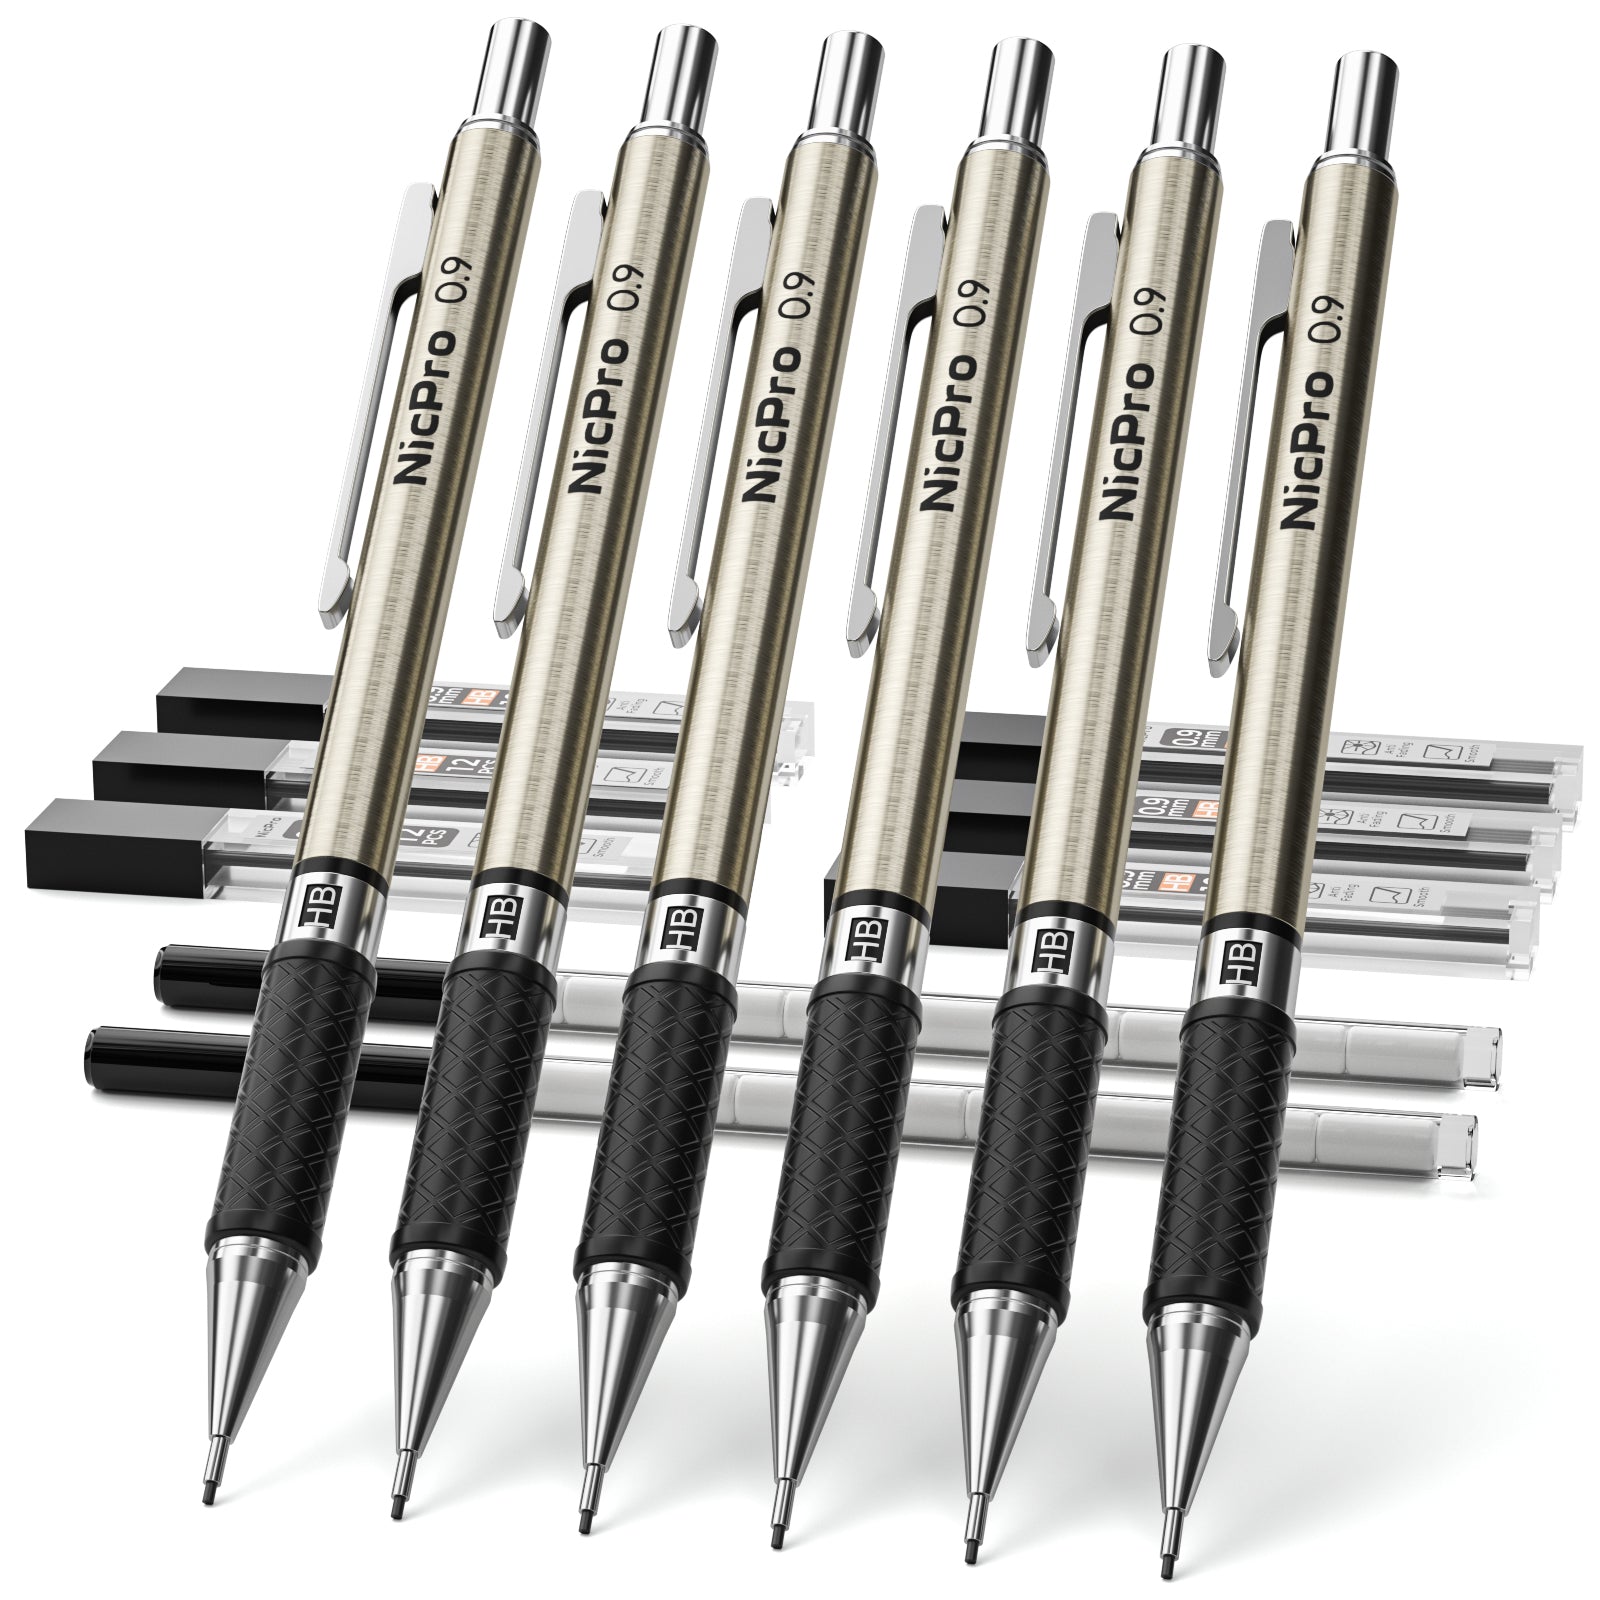 Nicpro 5 PCS Art Mechanical Pencil Set with Case, 3 PCS Metal Drafting